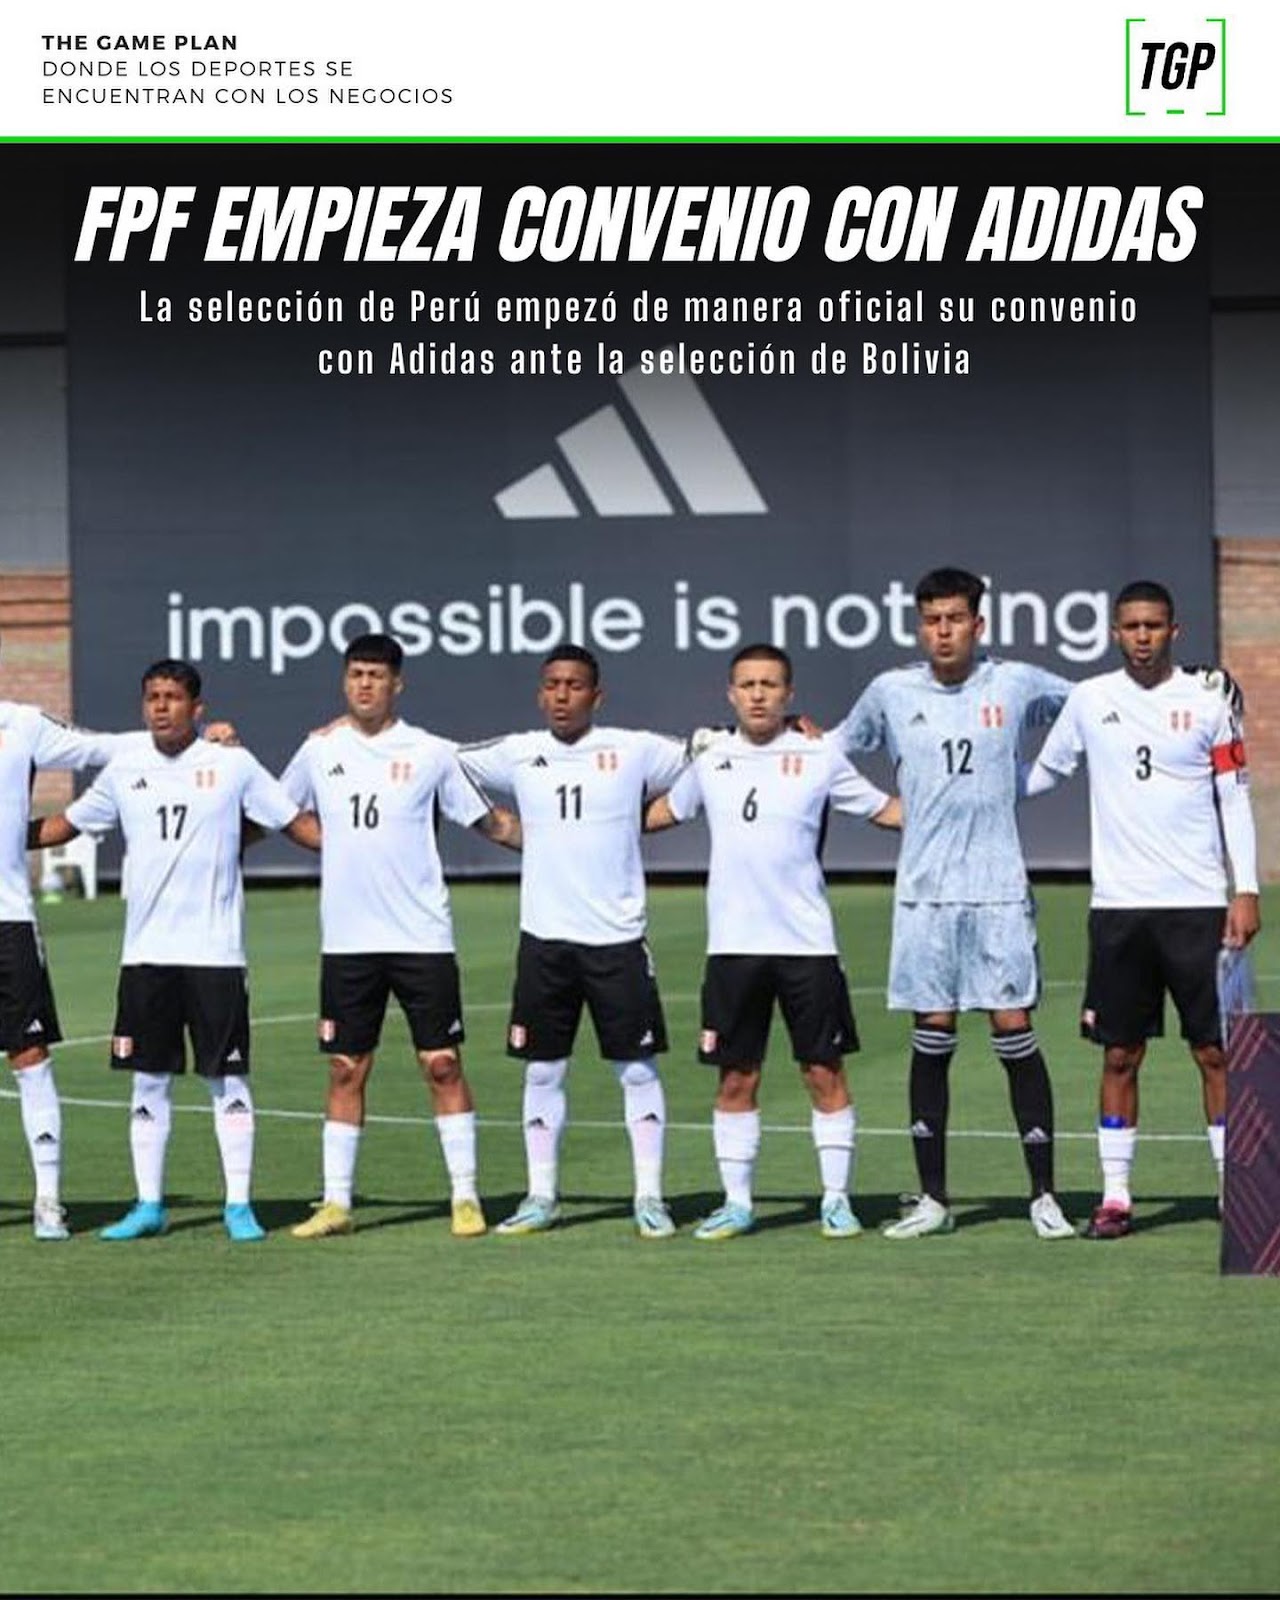 Adidas Kits Coming 5 Hours: Peru U20 Team Wear White/Black Training Kit in Friendly - Footy Headlines